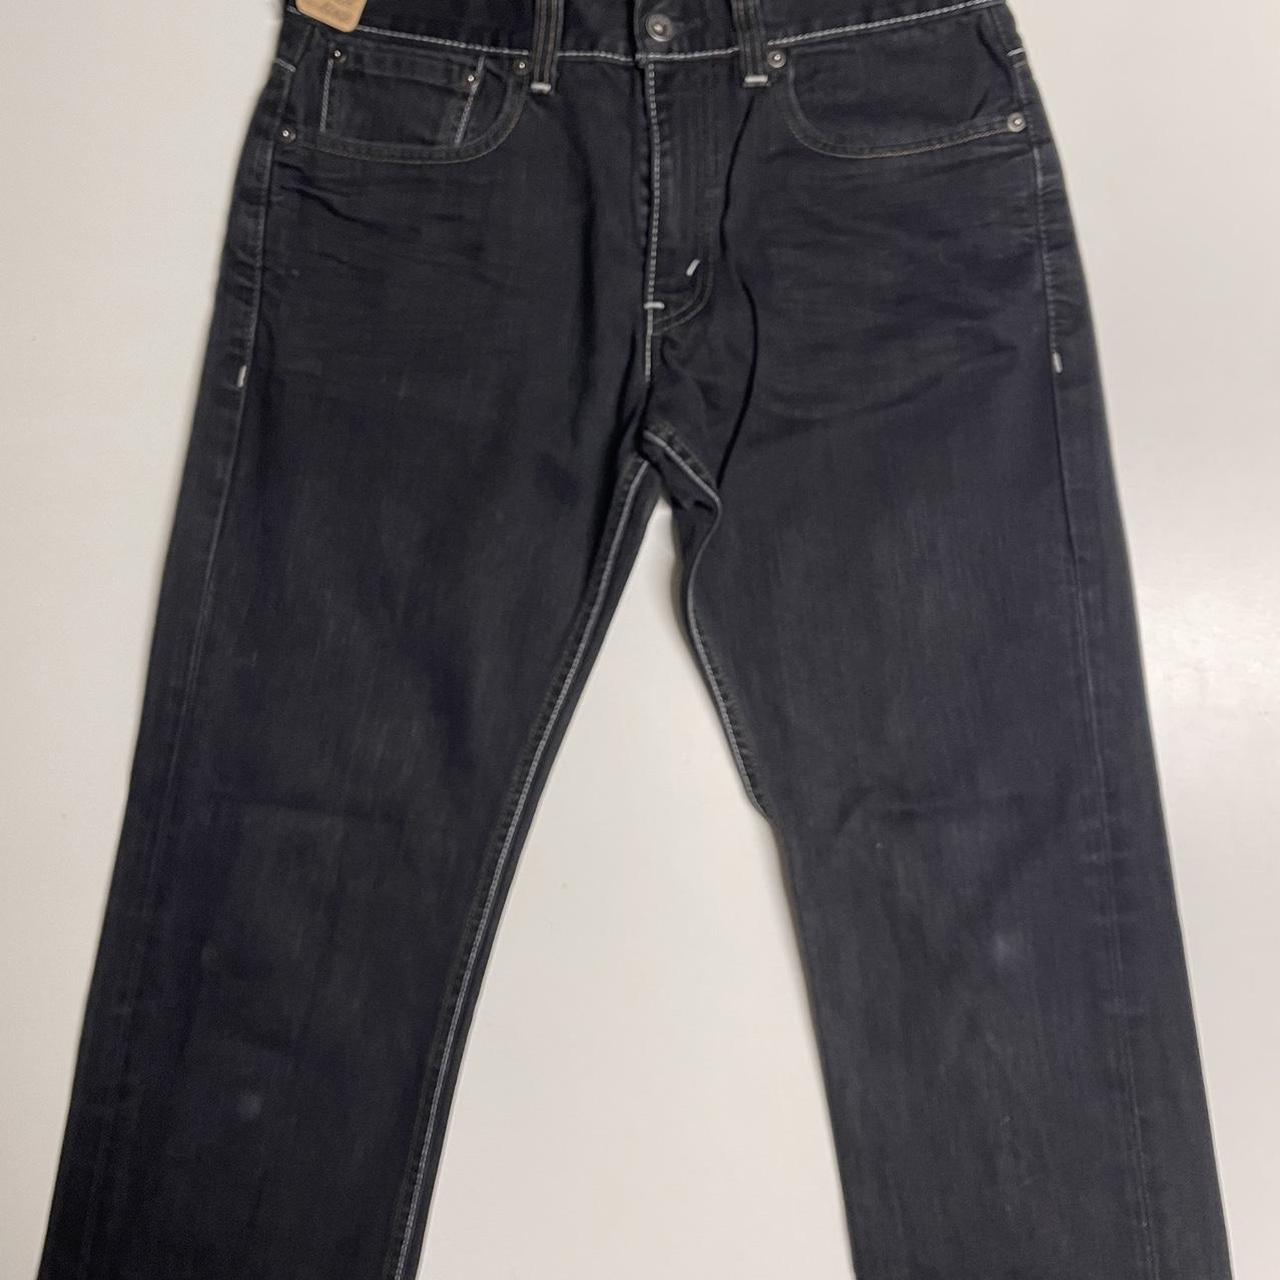 Levi's 511 Slim Fit Jeans Mens 32x34 Dark Blue Soft... - Depop